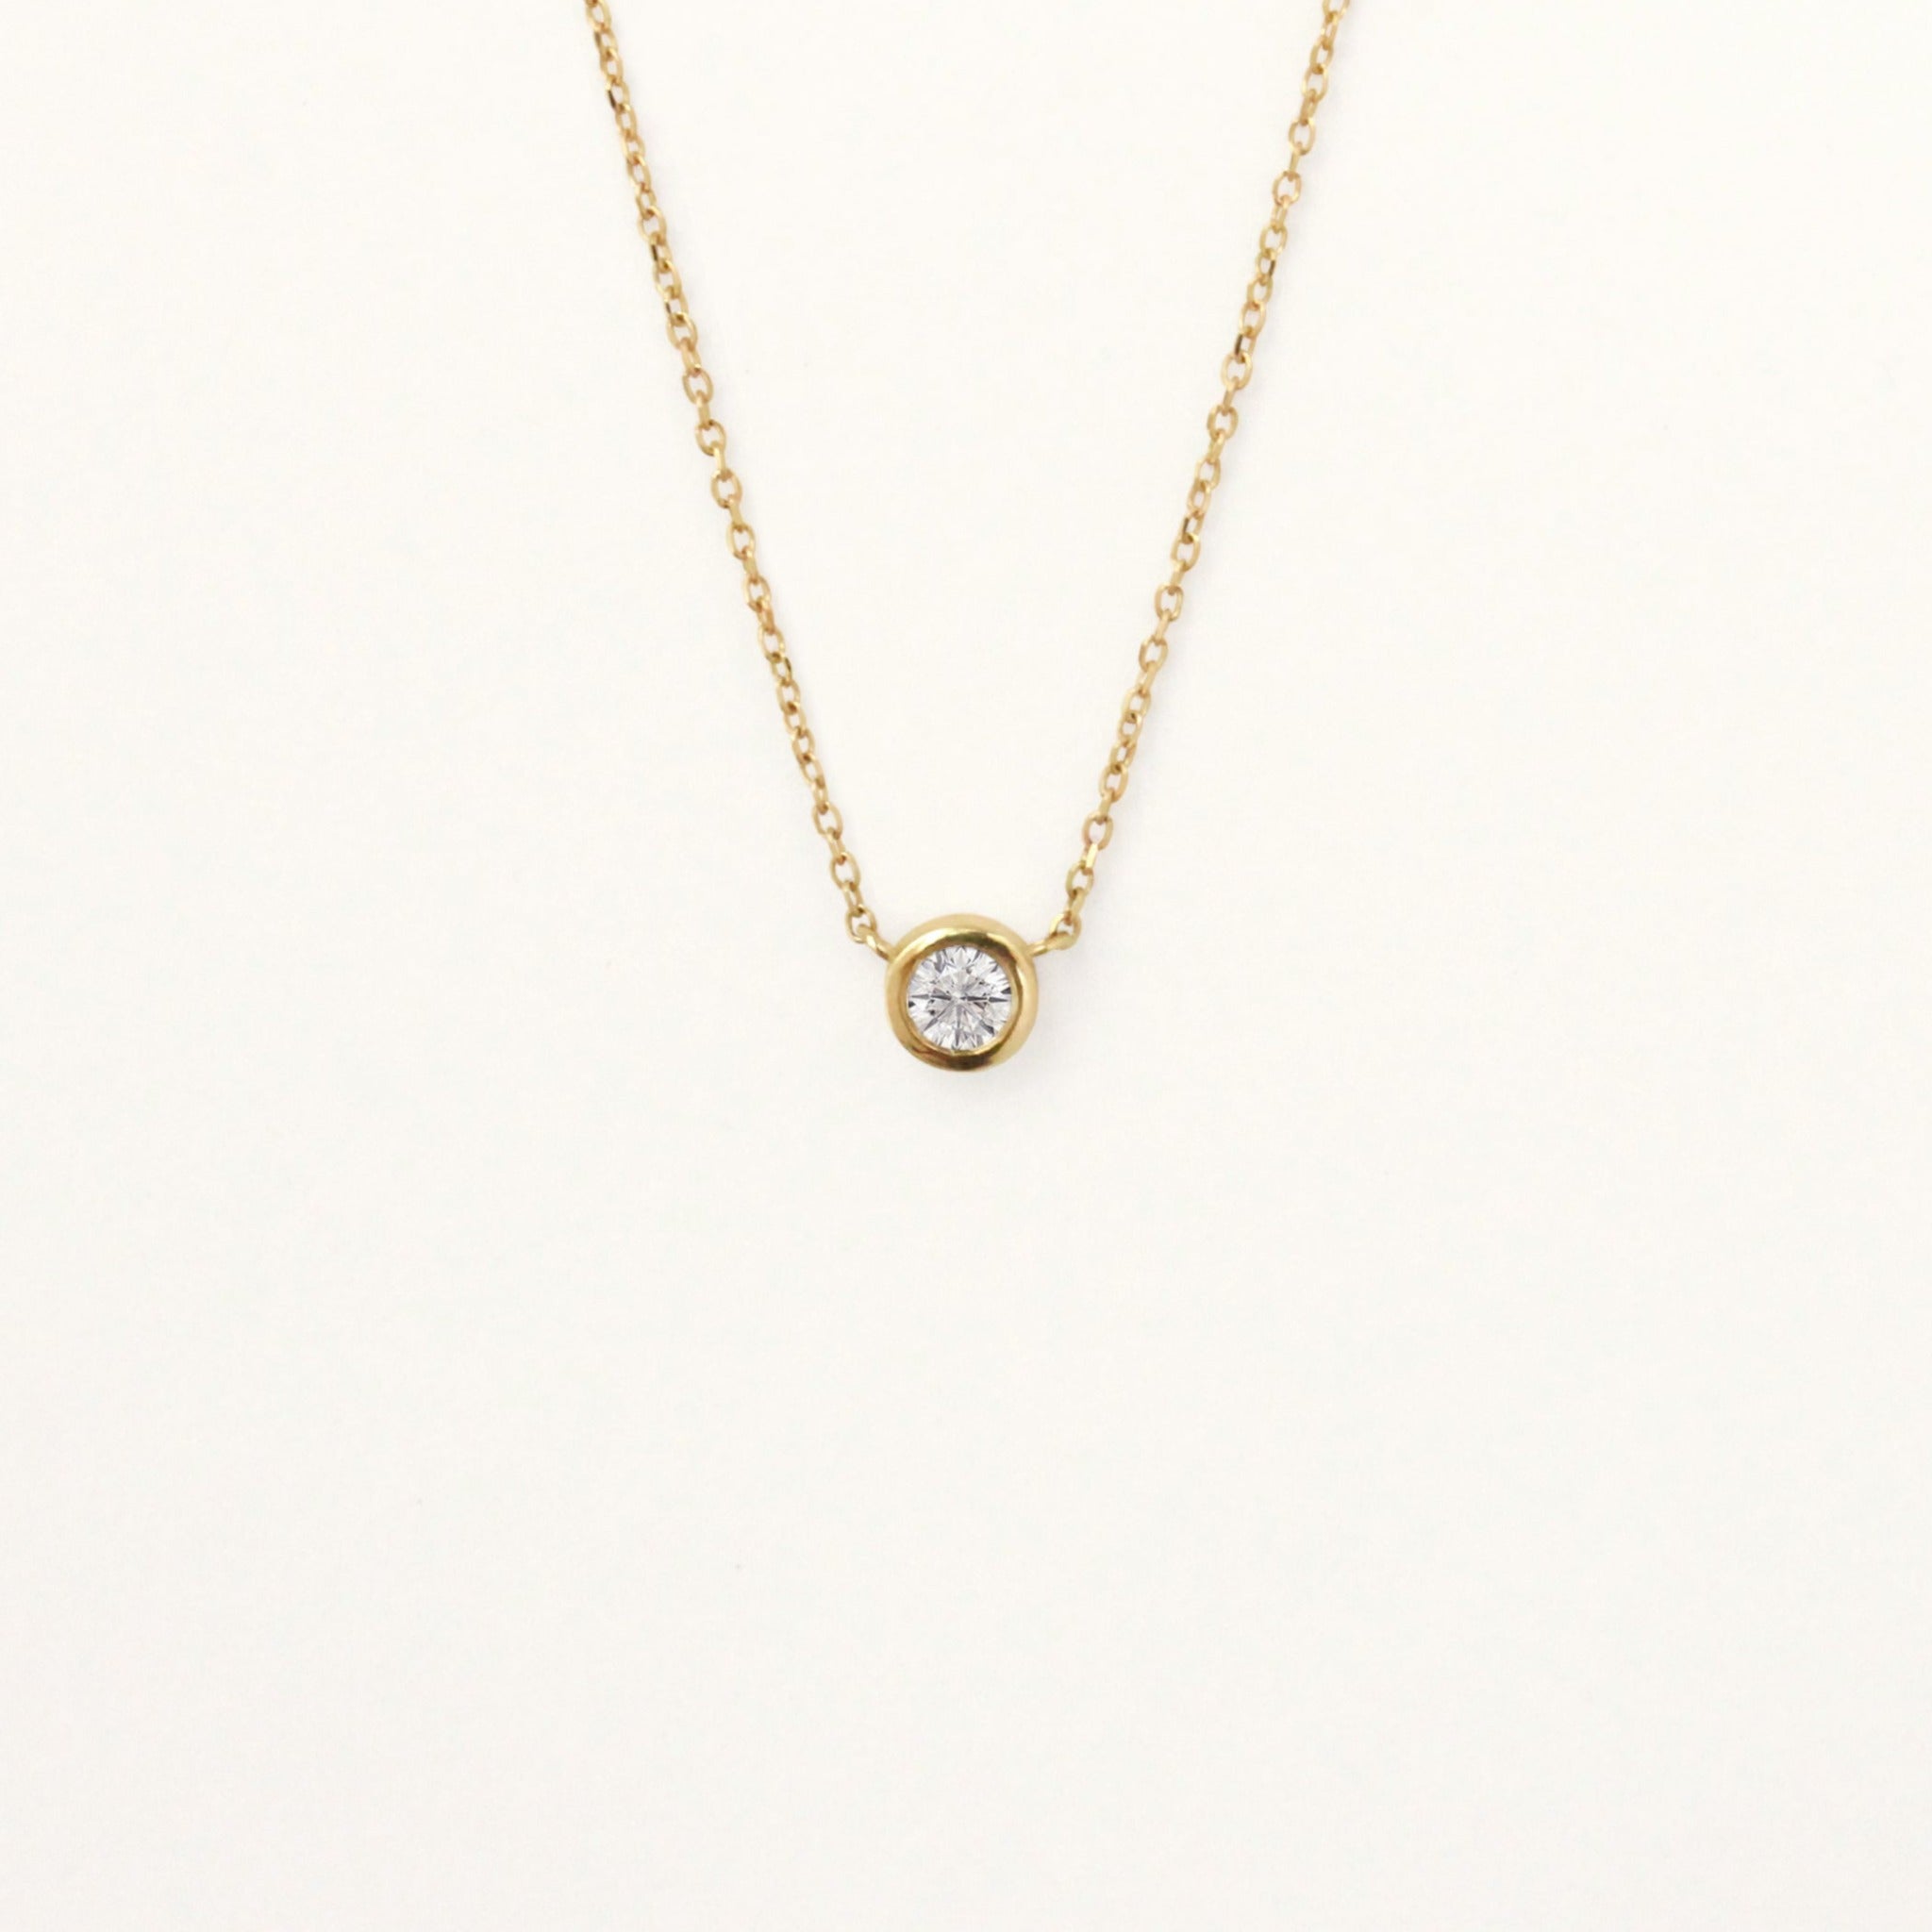 Brilliant cut diamond pendant necklace on a thin gold 14k yellow chain.